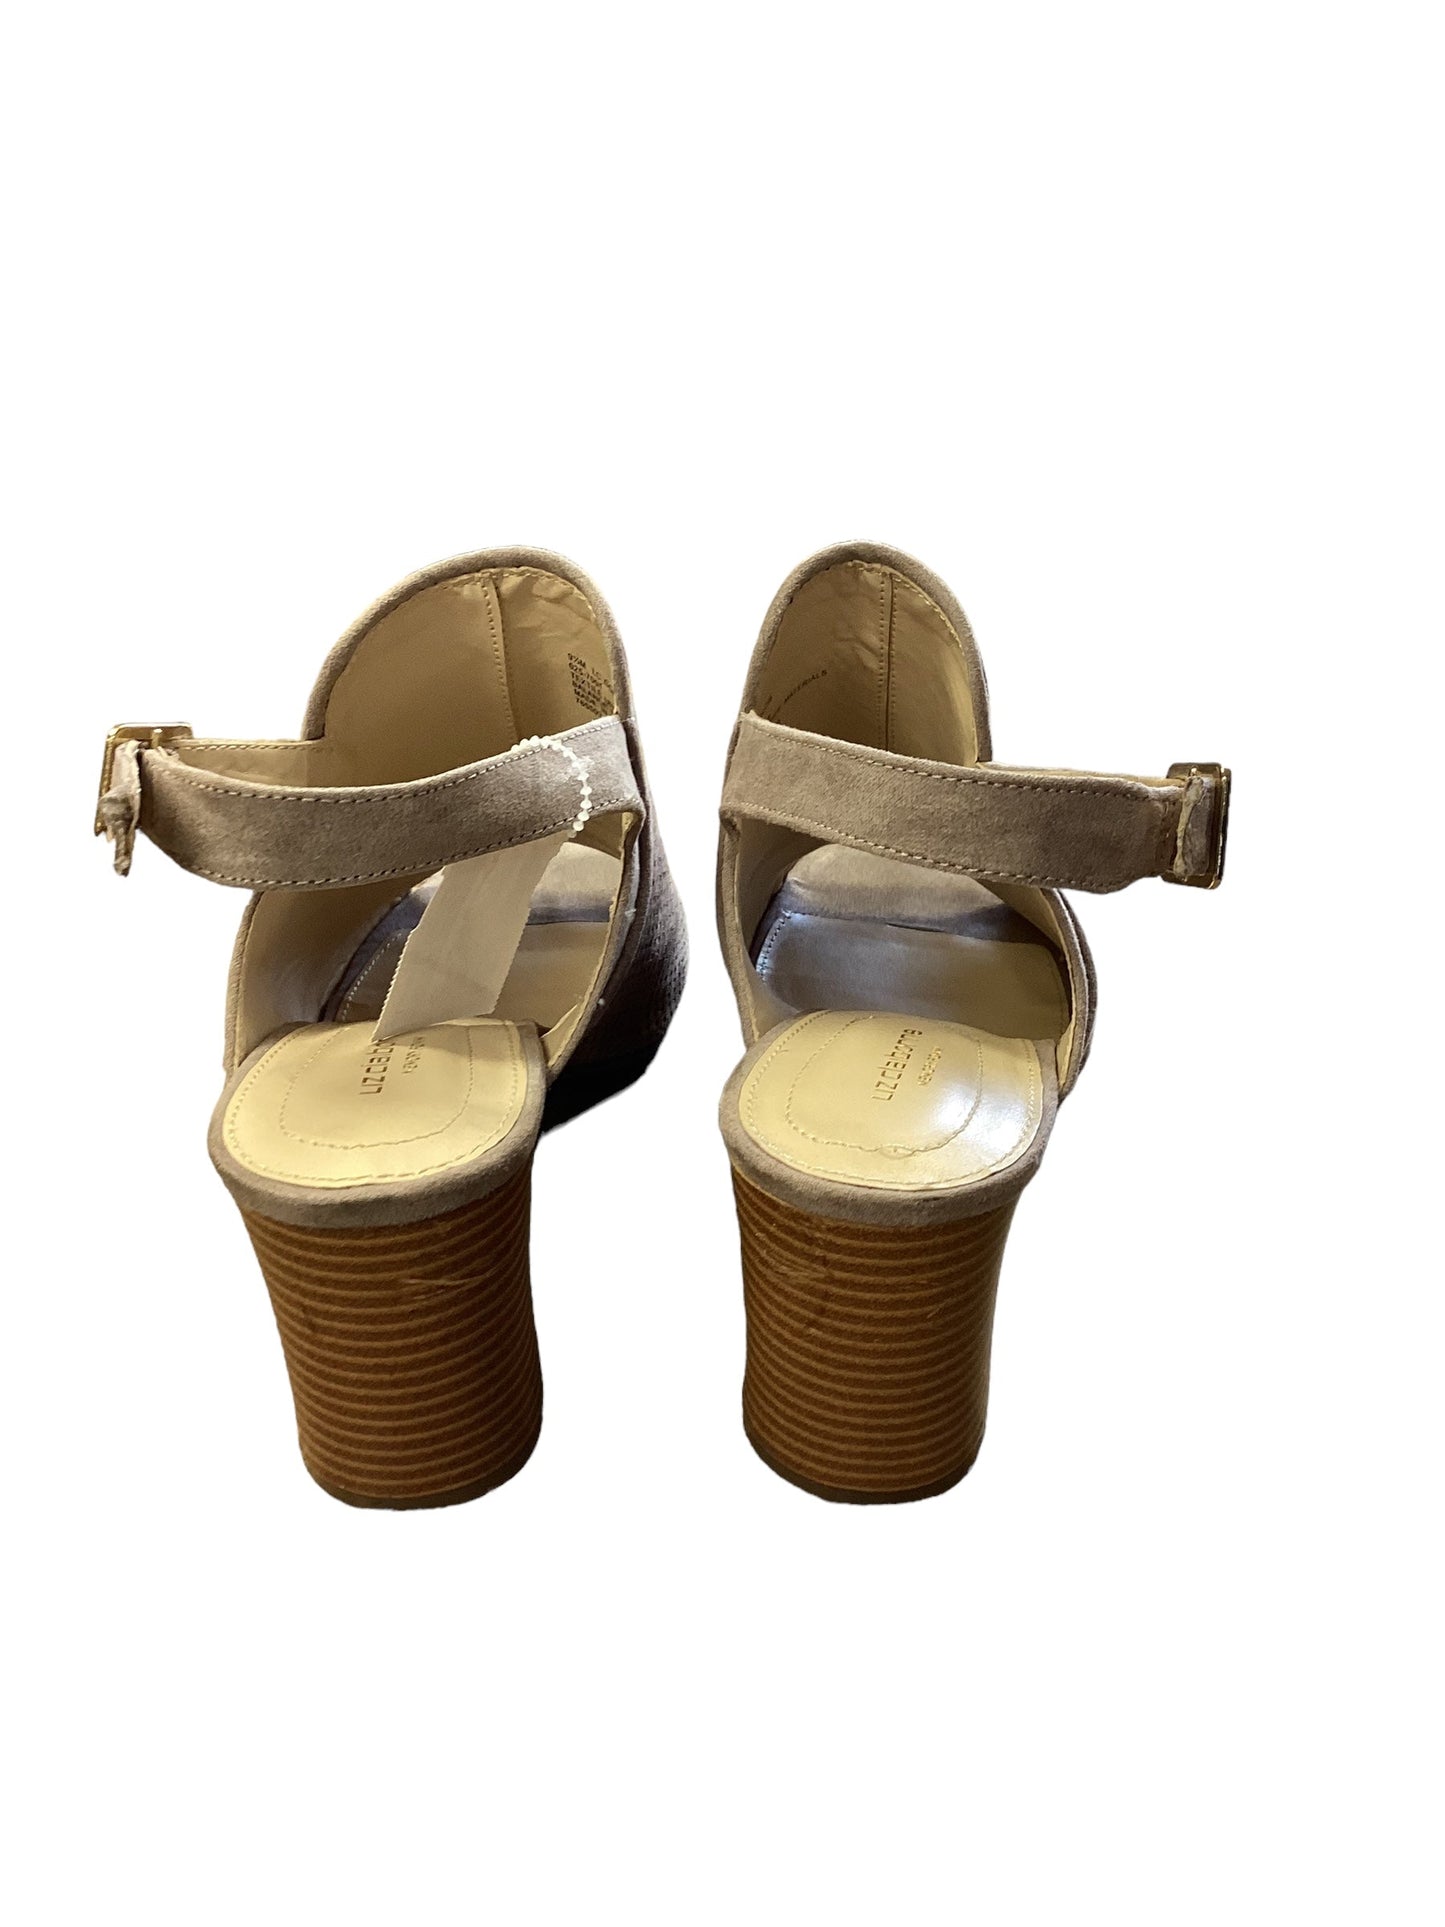 Beige Sandals Heels Block Liz Claiborne, Size 9.5